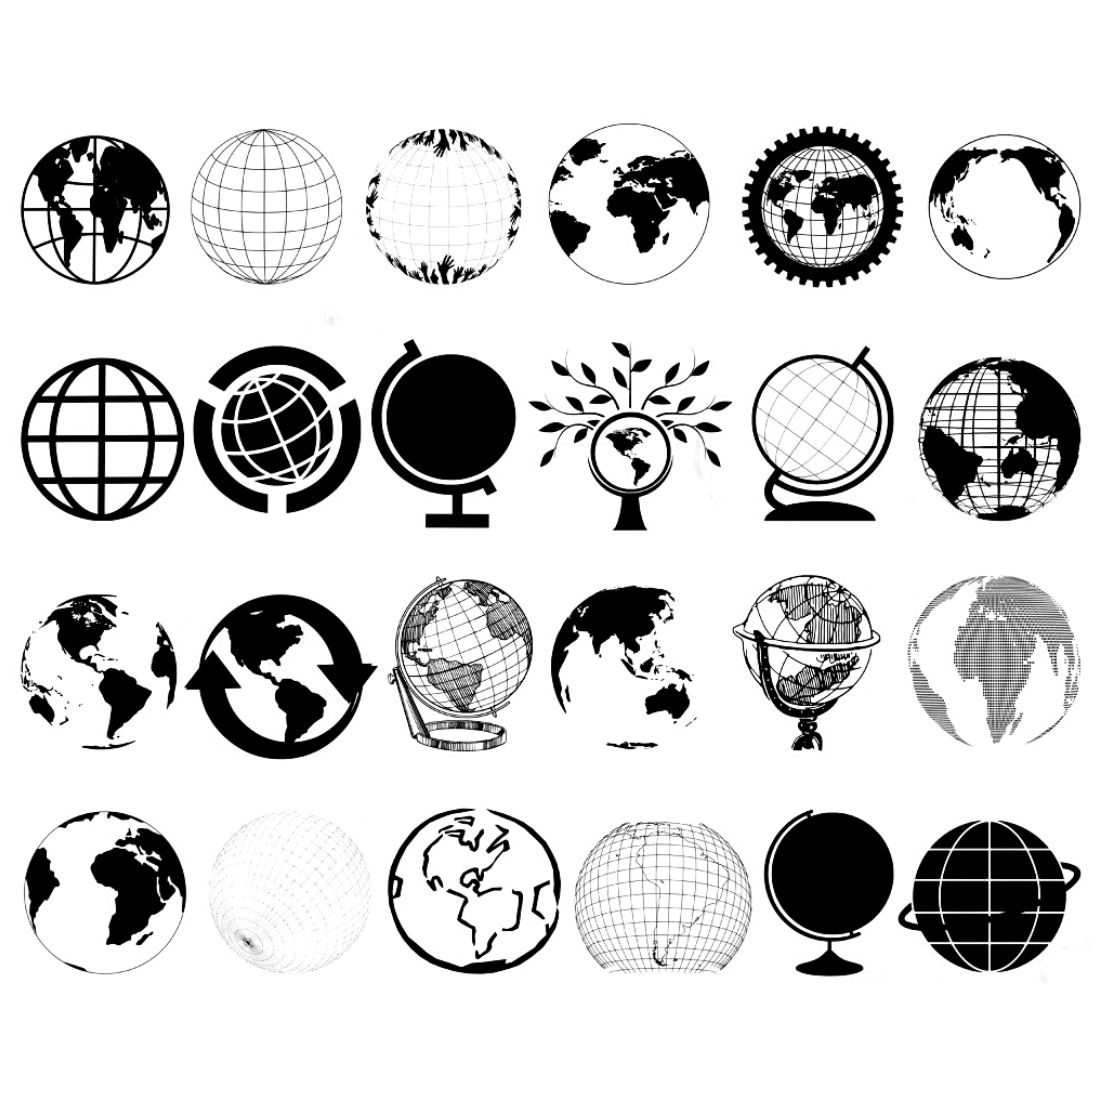 Globe Silhouette Bundles cover image.